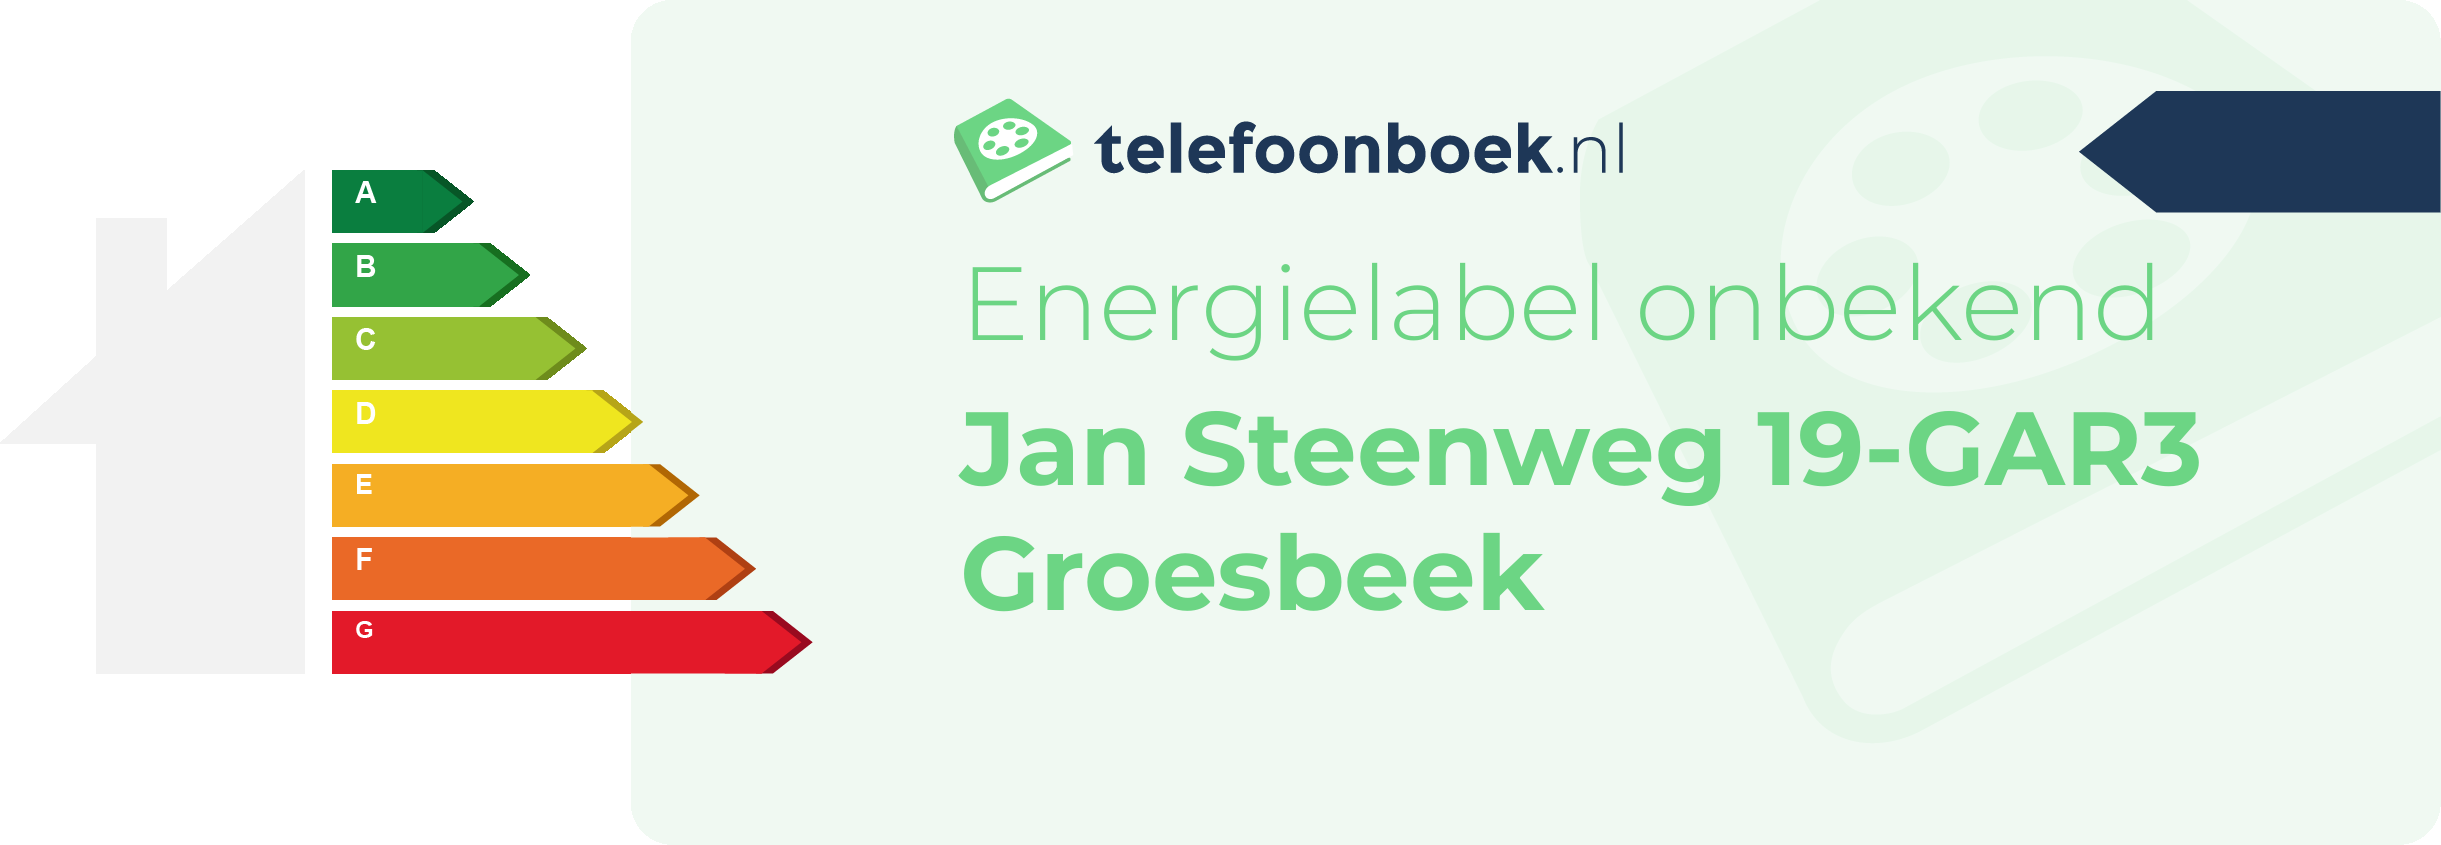 Energielabel Jan Steenweg 19-GAR3 Groesbeek